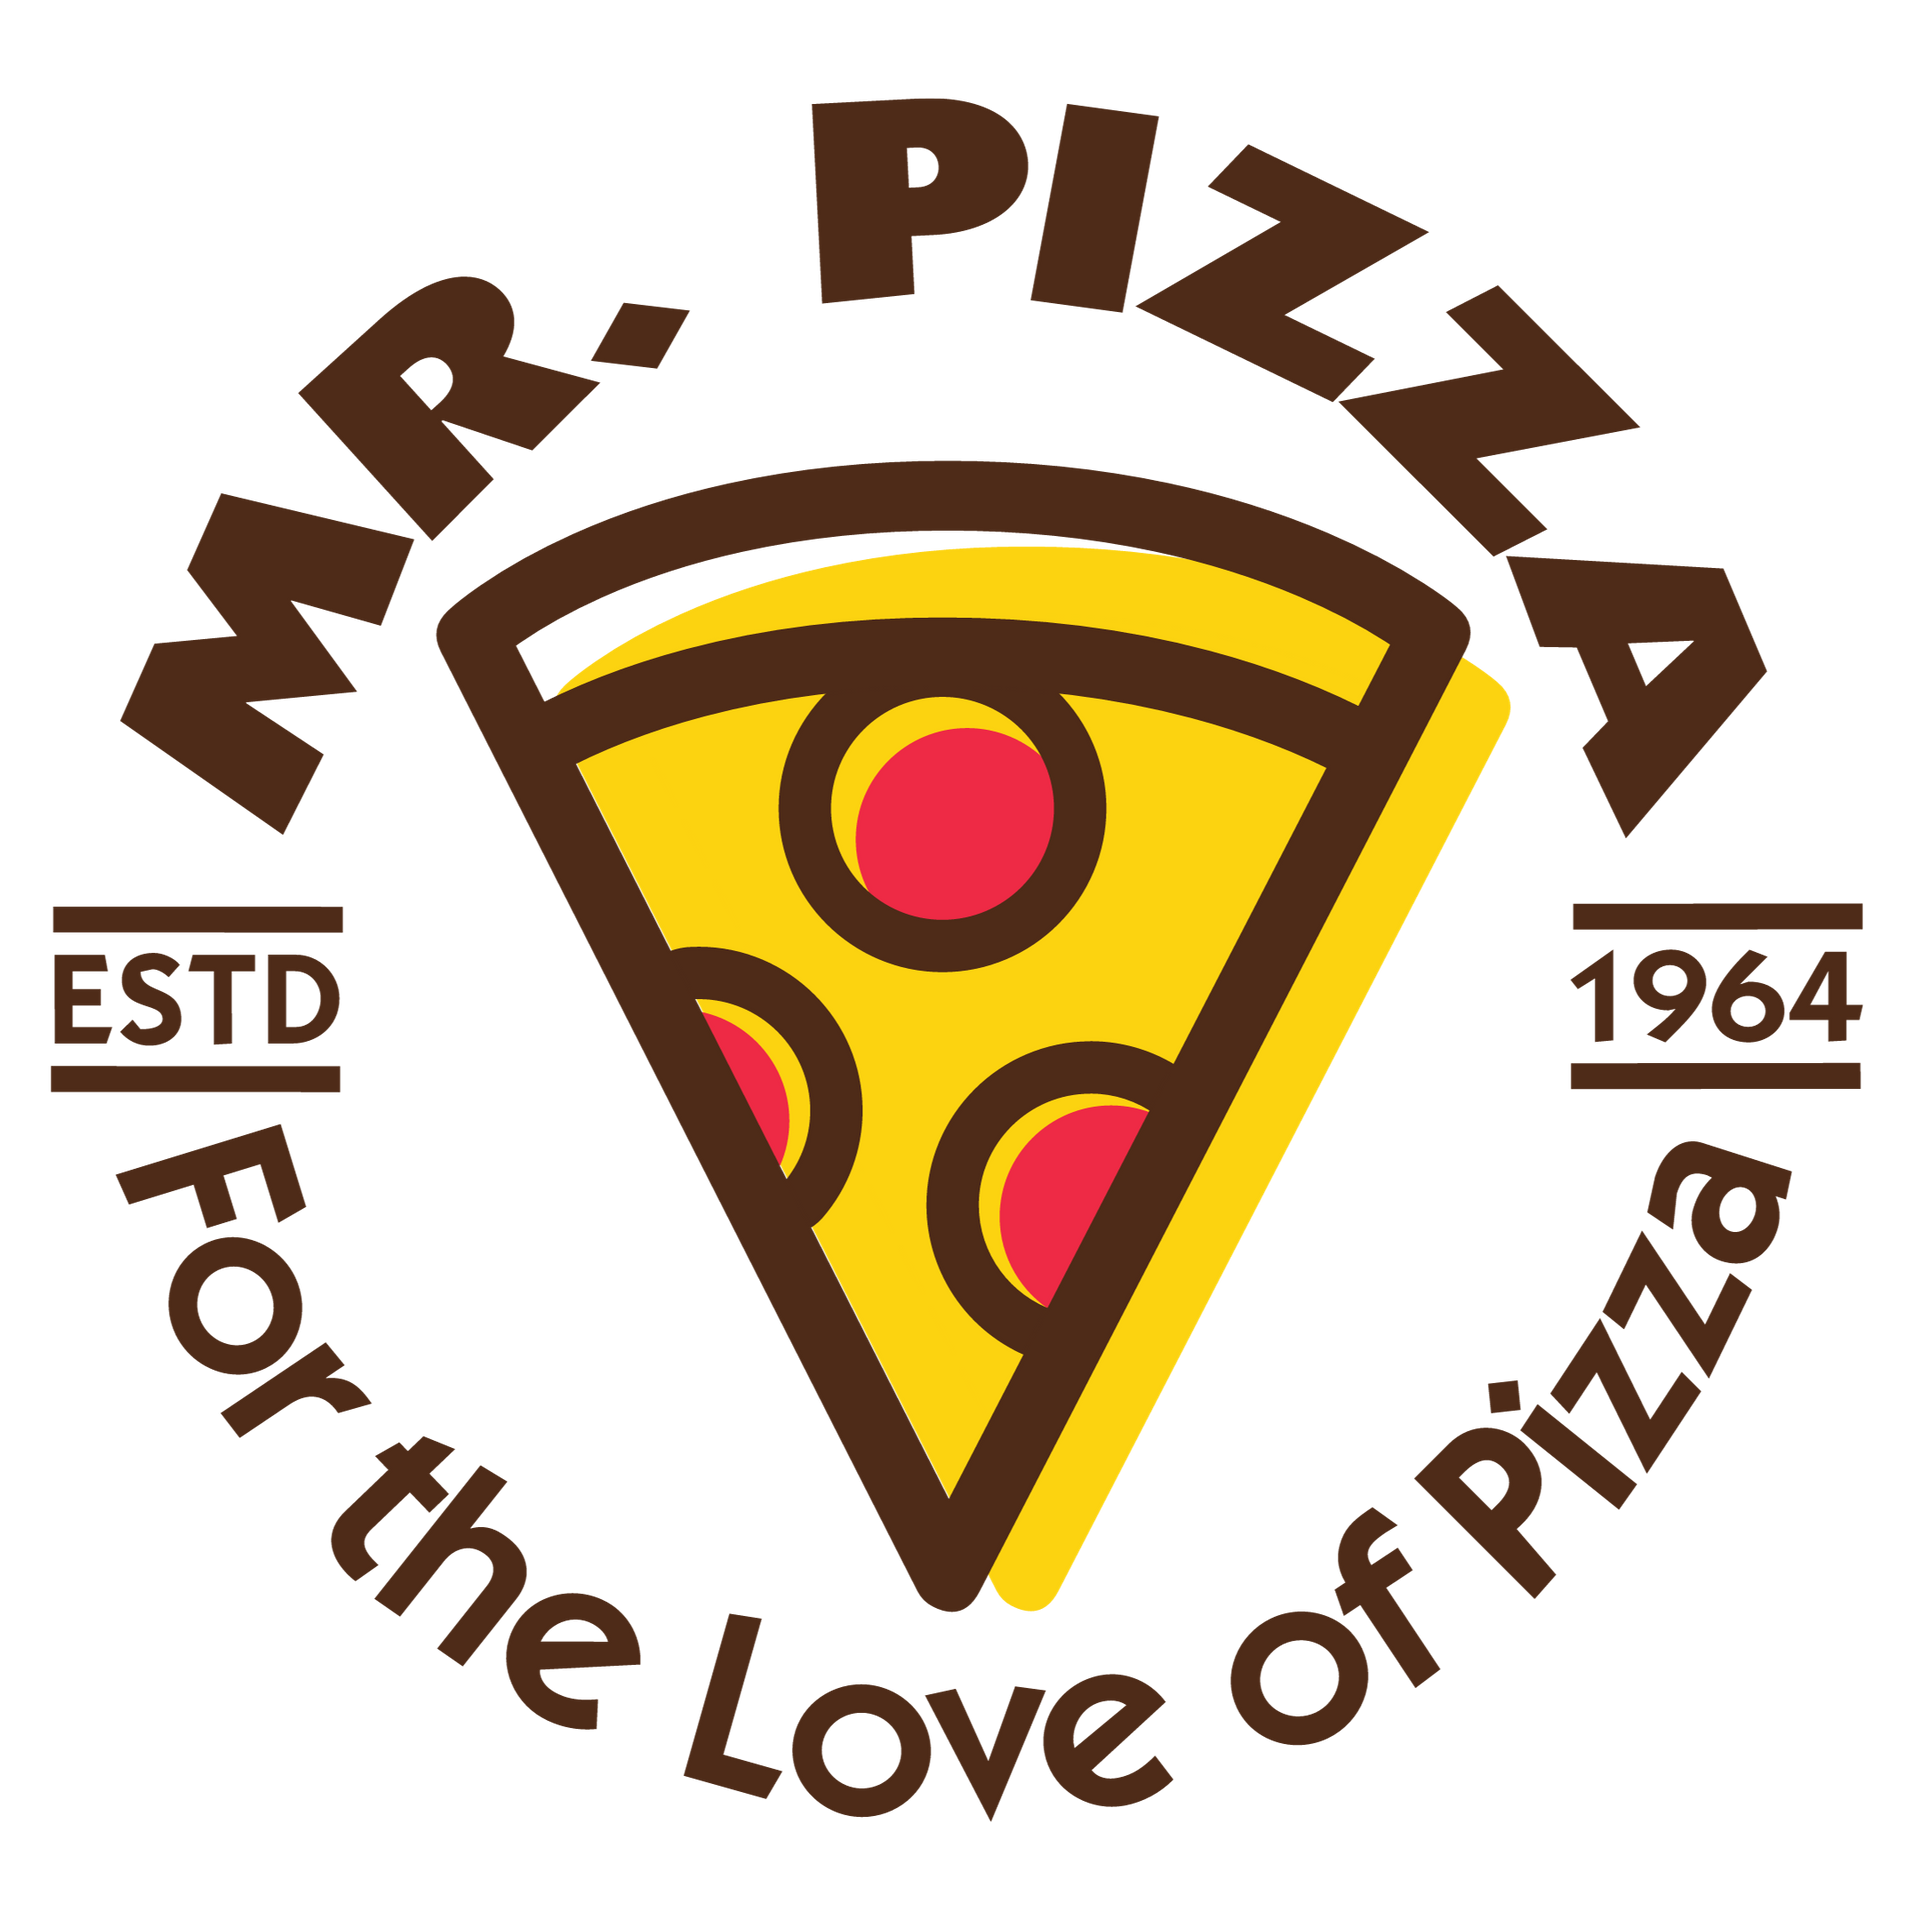 Mr. Pizza's logo